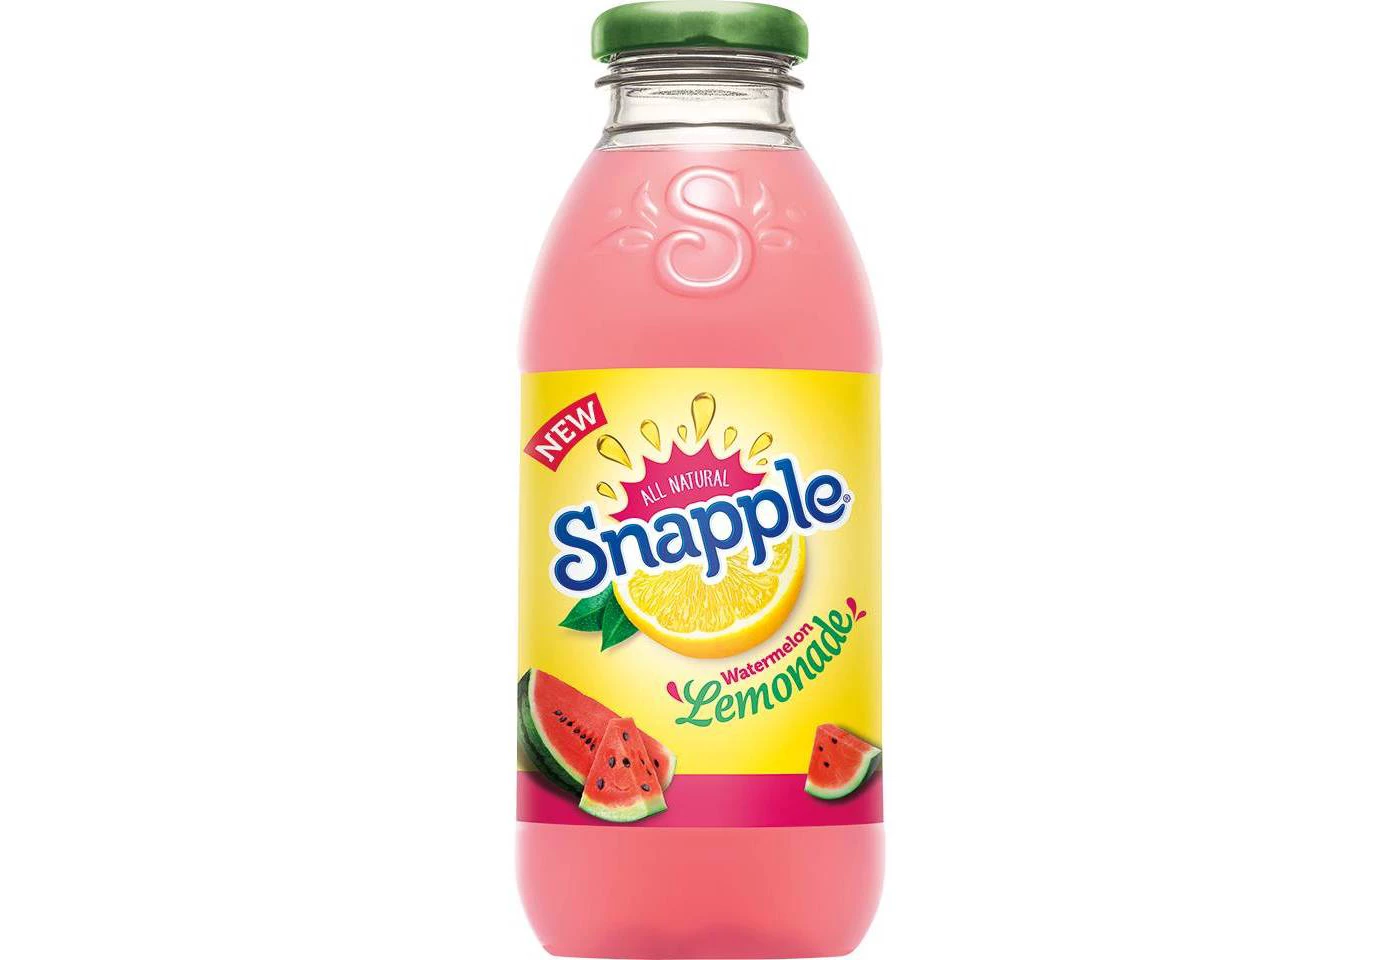 Snapple Watermelon Lemonade - 16 fl oz Bottle - image 1 of 1